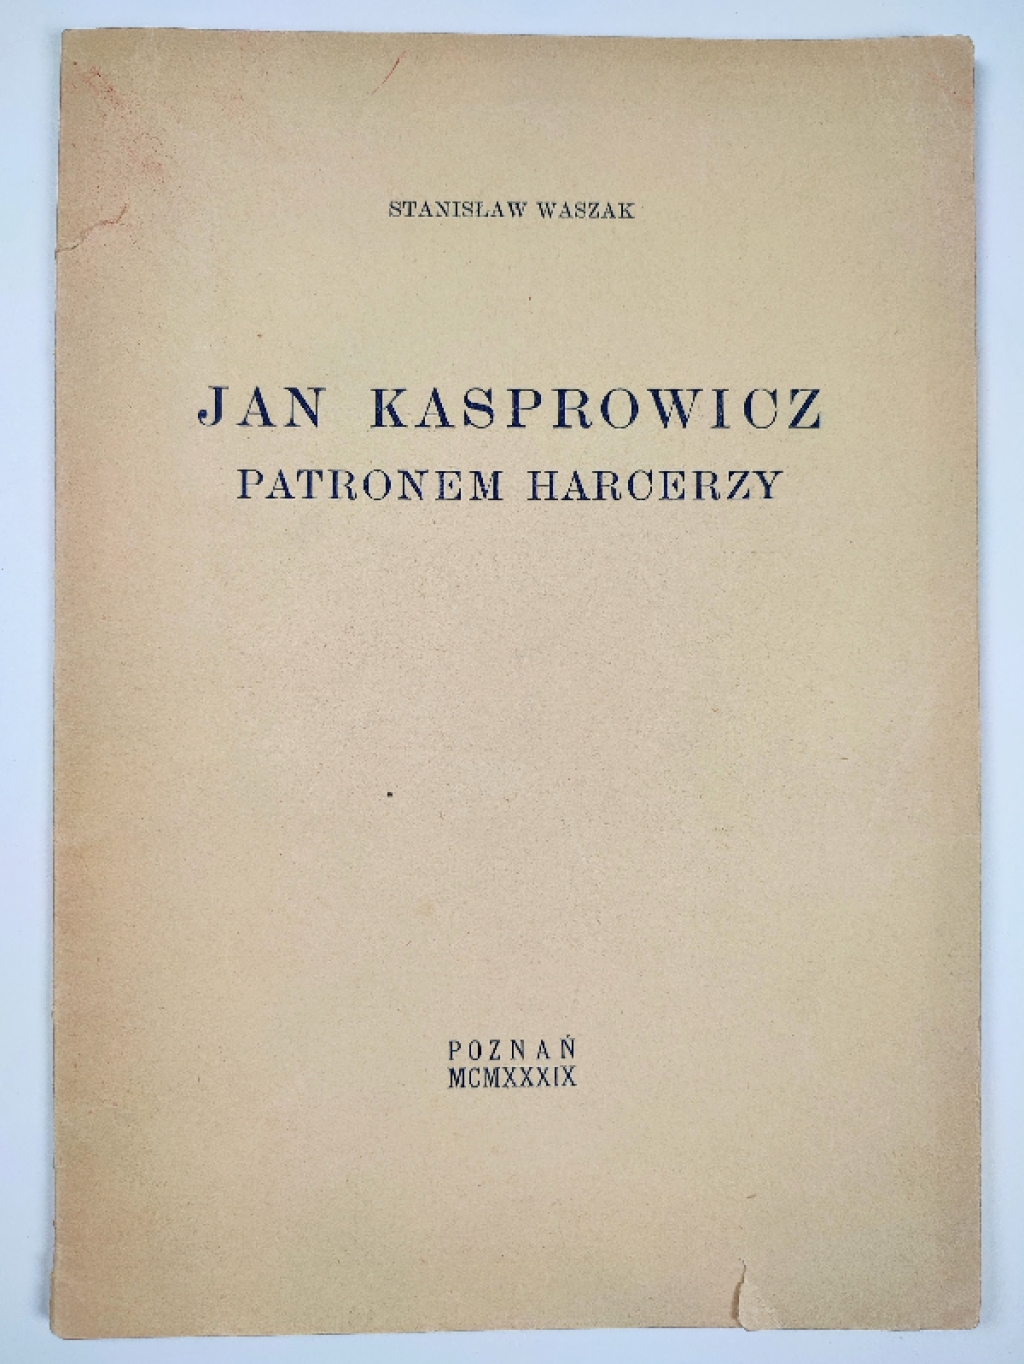 Jan Kasprowicz patronem harcerzy